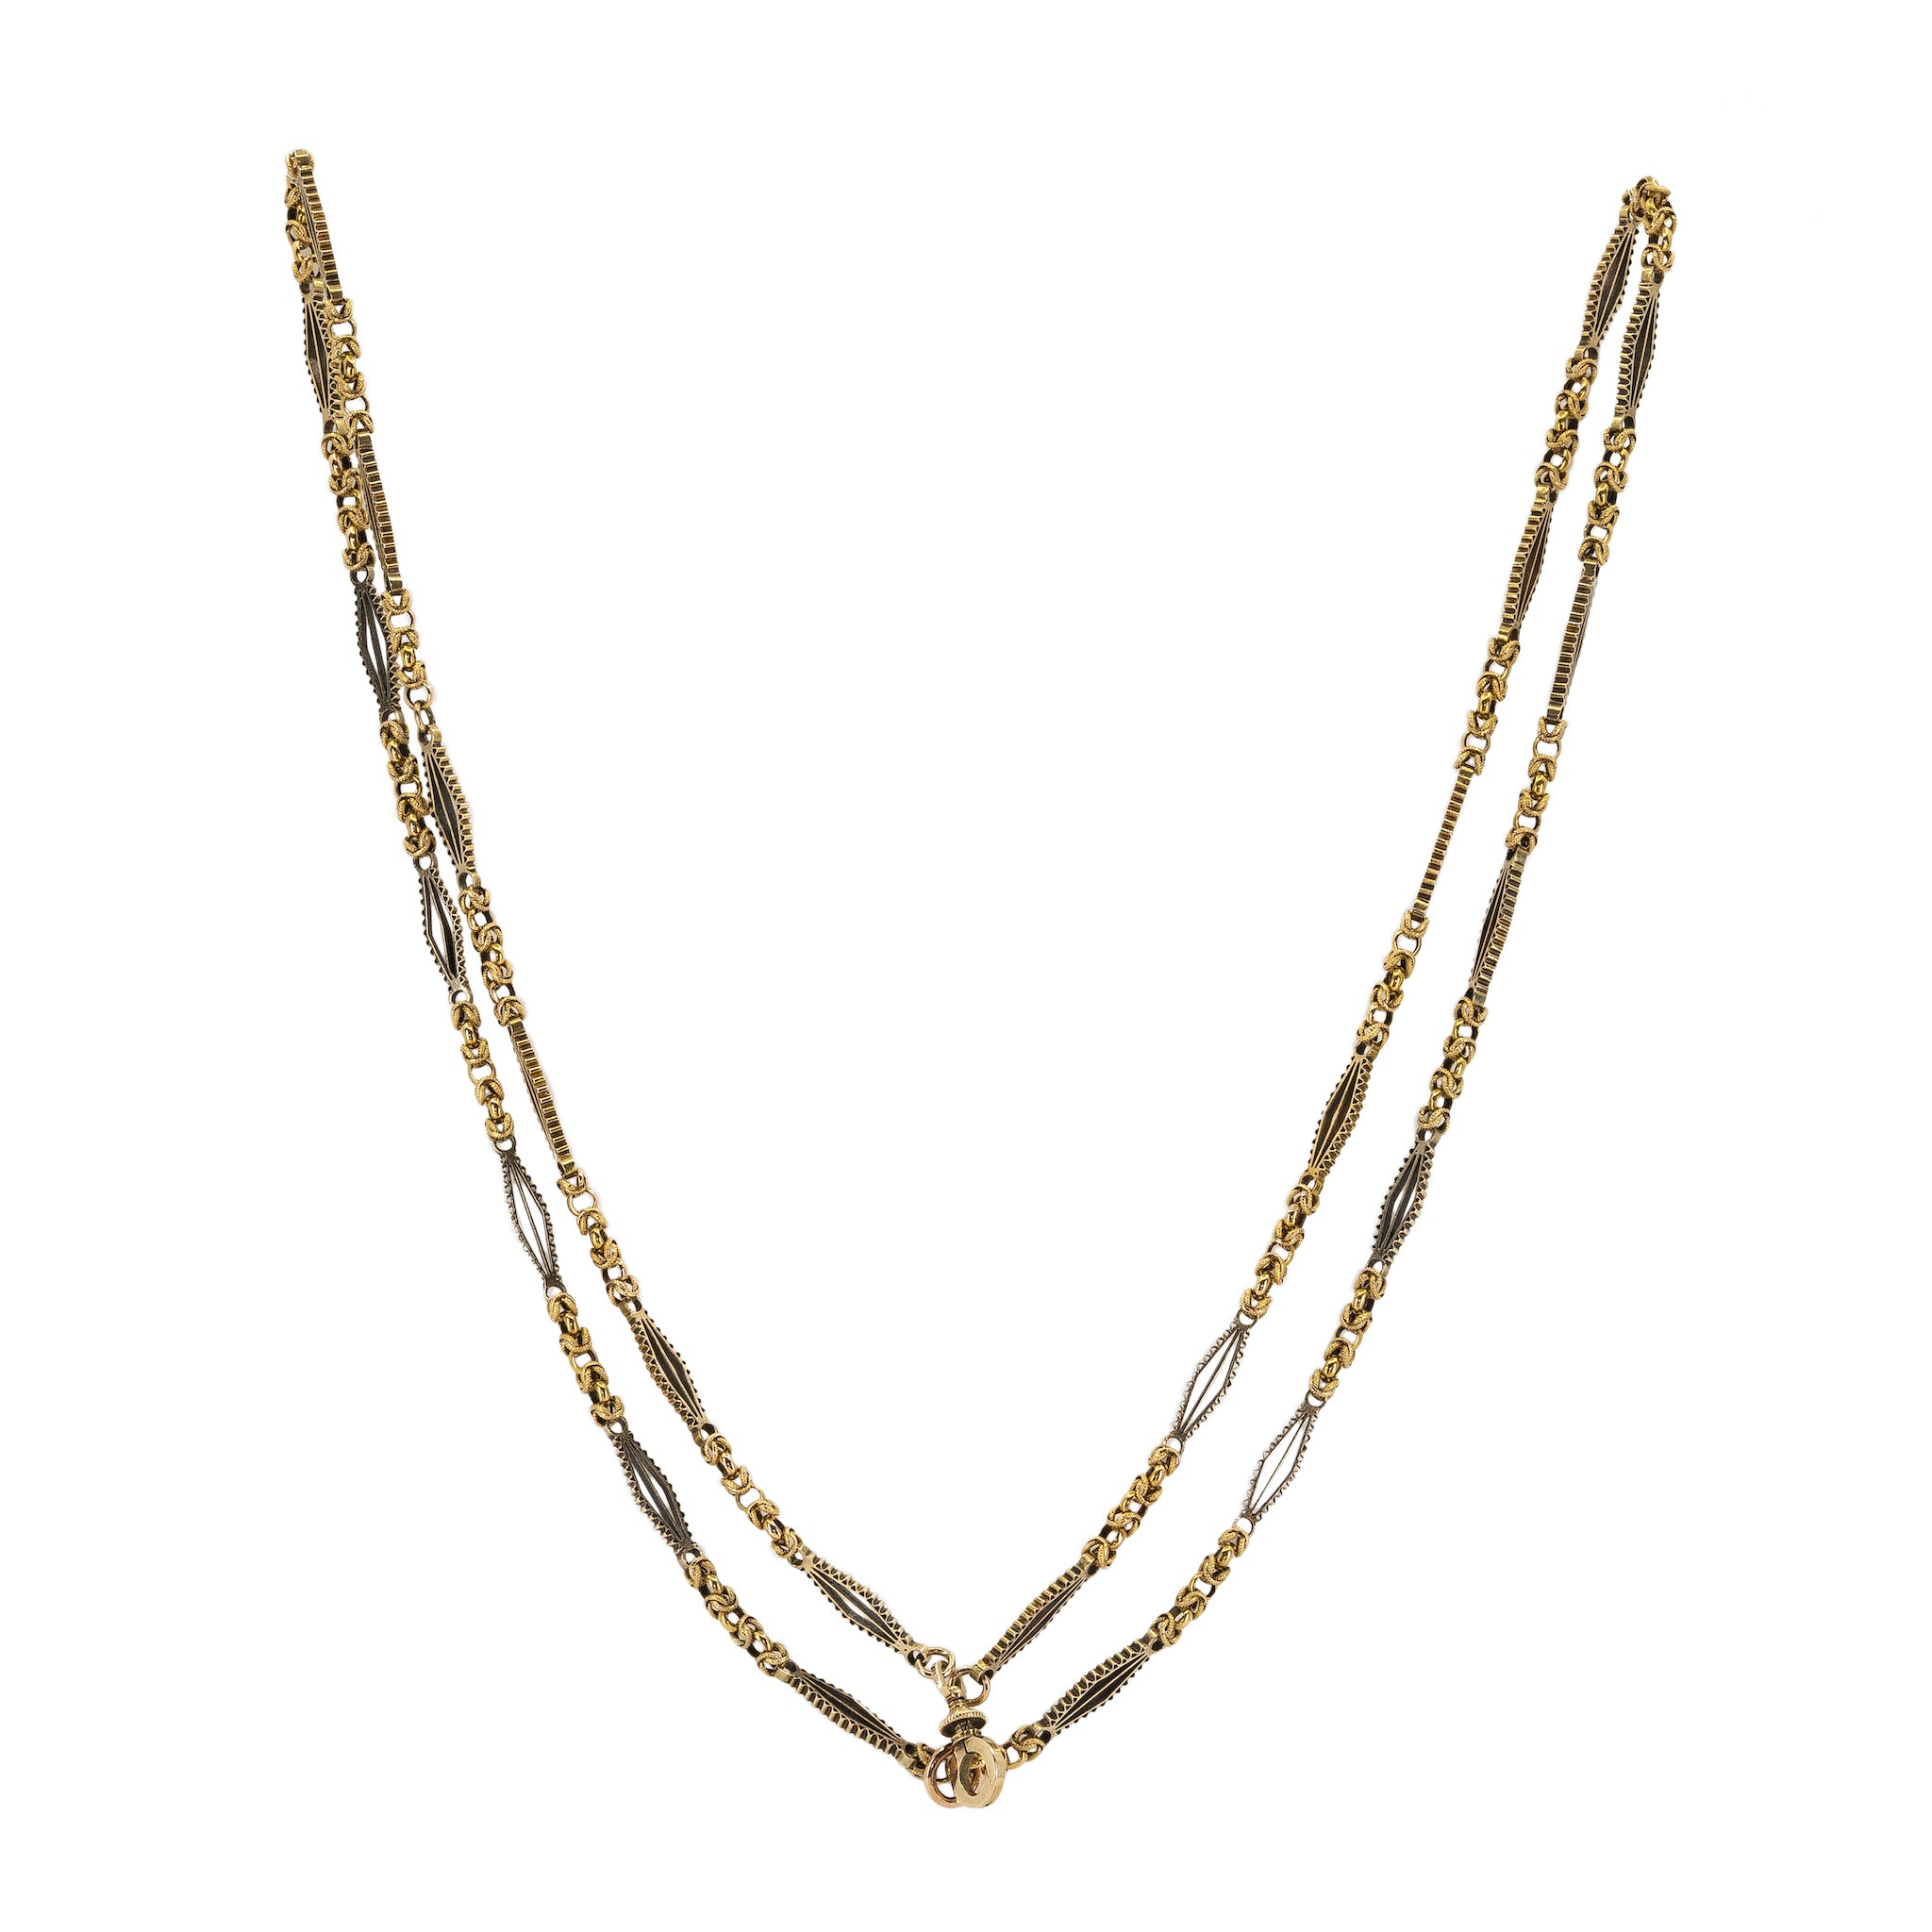 Victorian 18ct Gold Chain